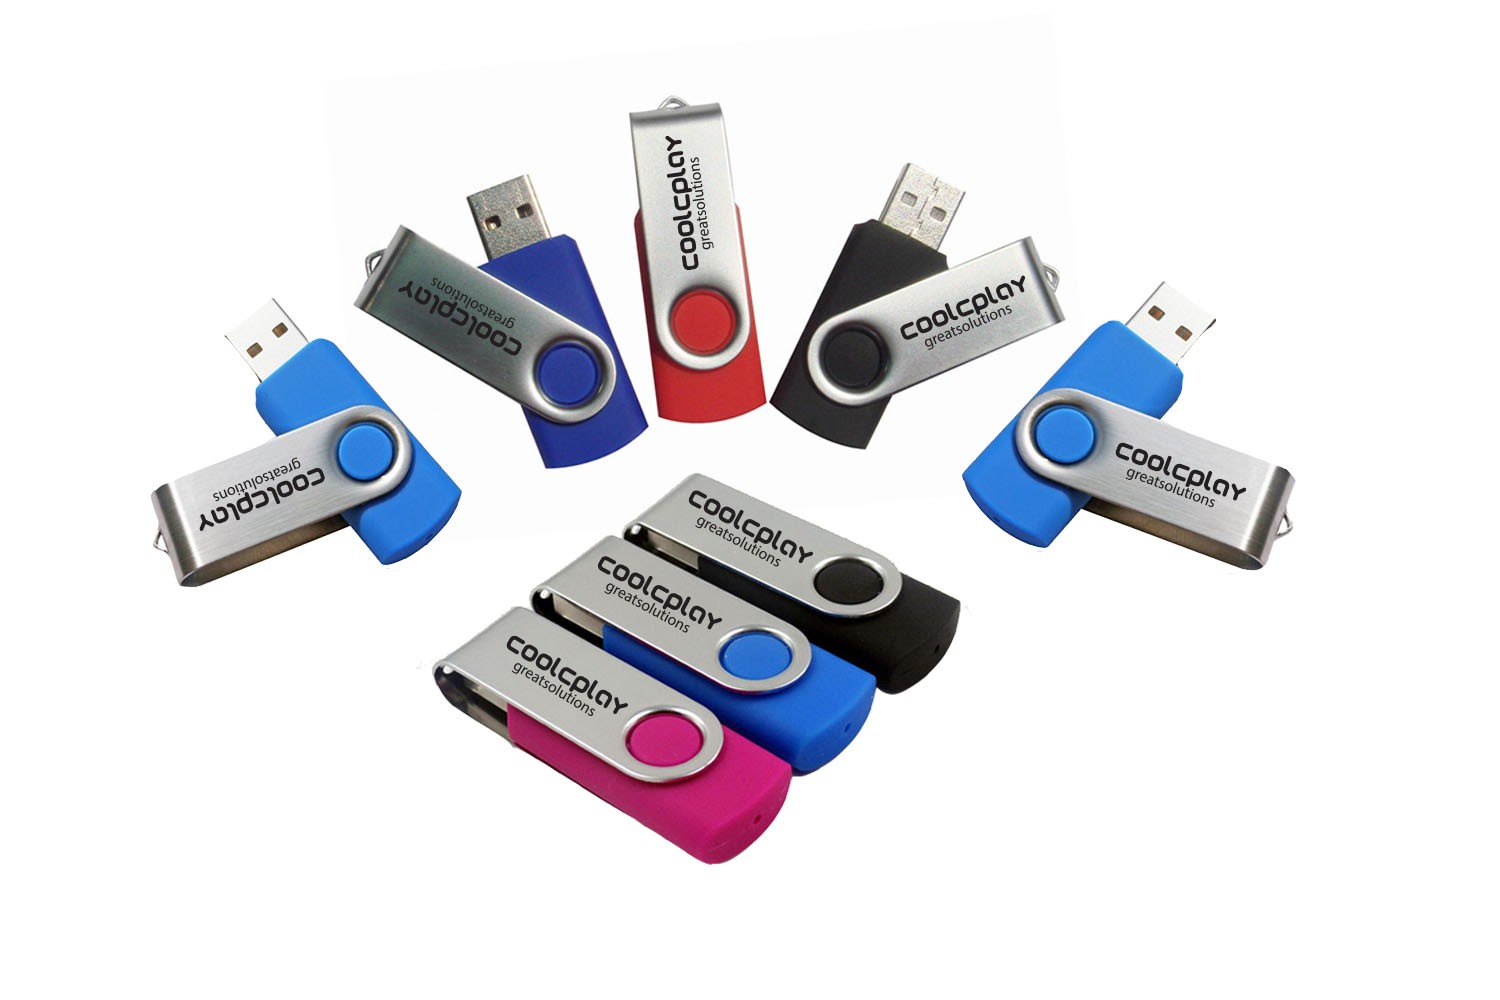 Colorful 8 GB USB Flashdrive With Swivel Cap